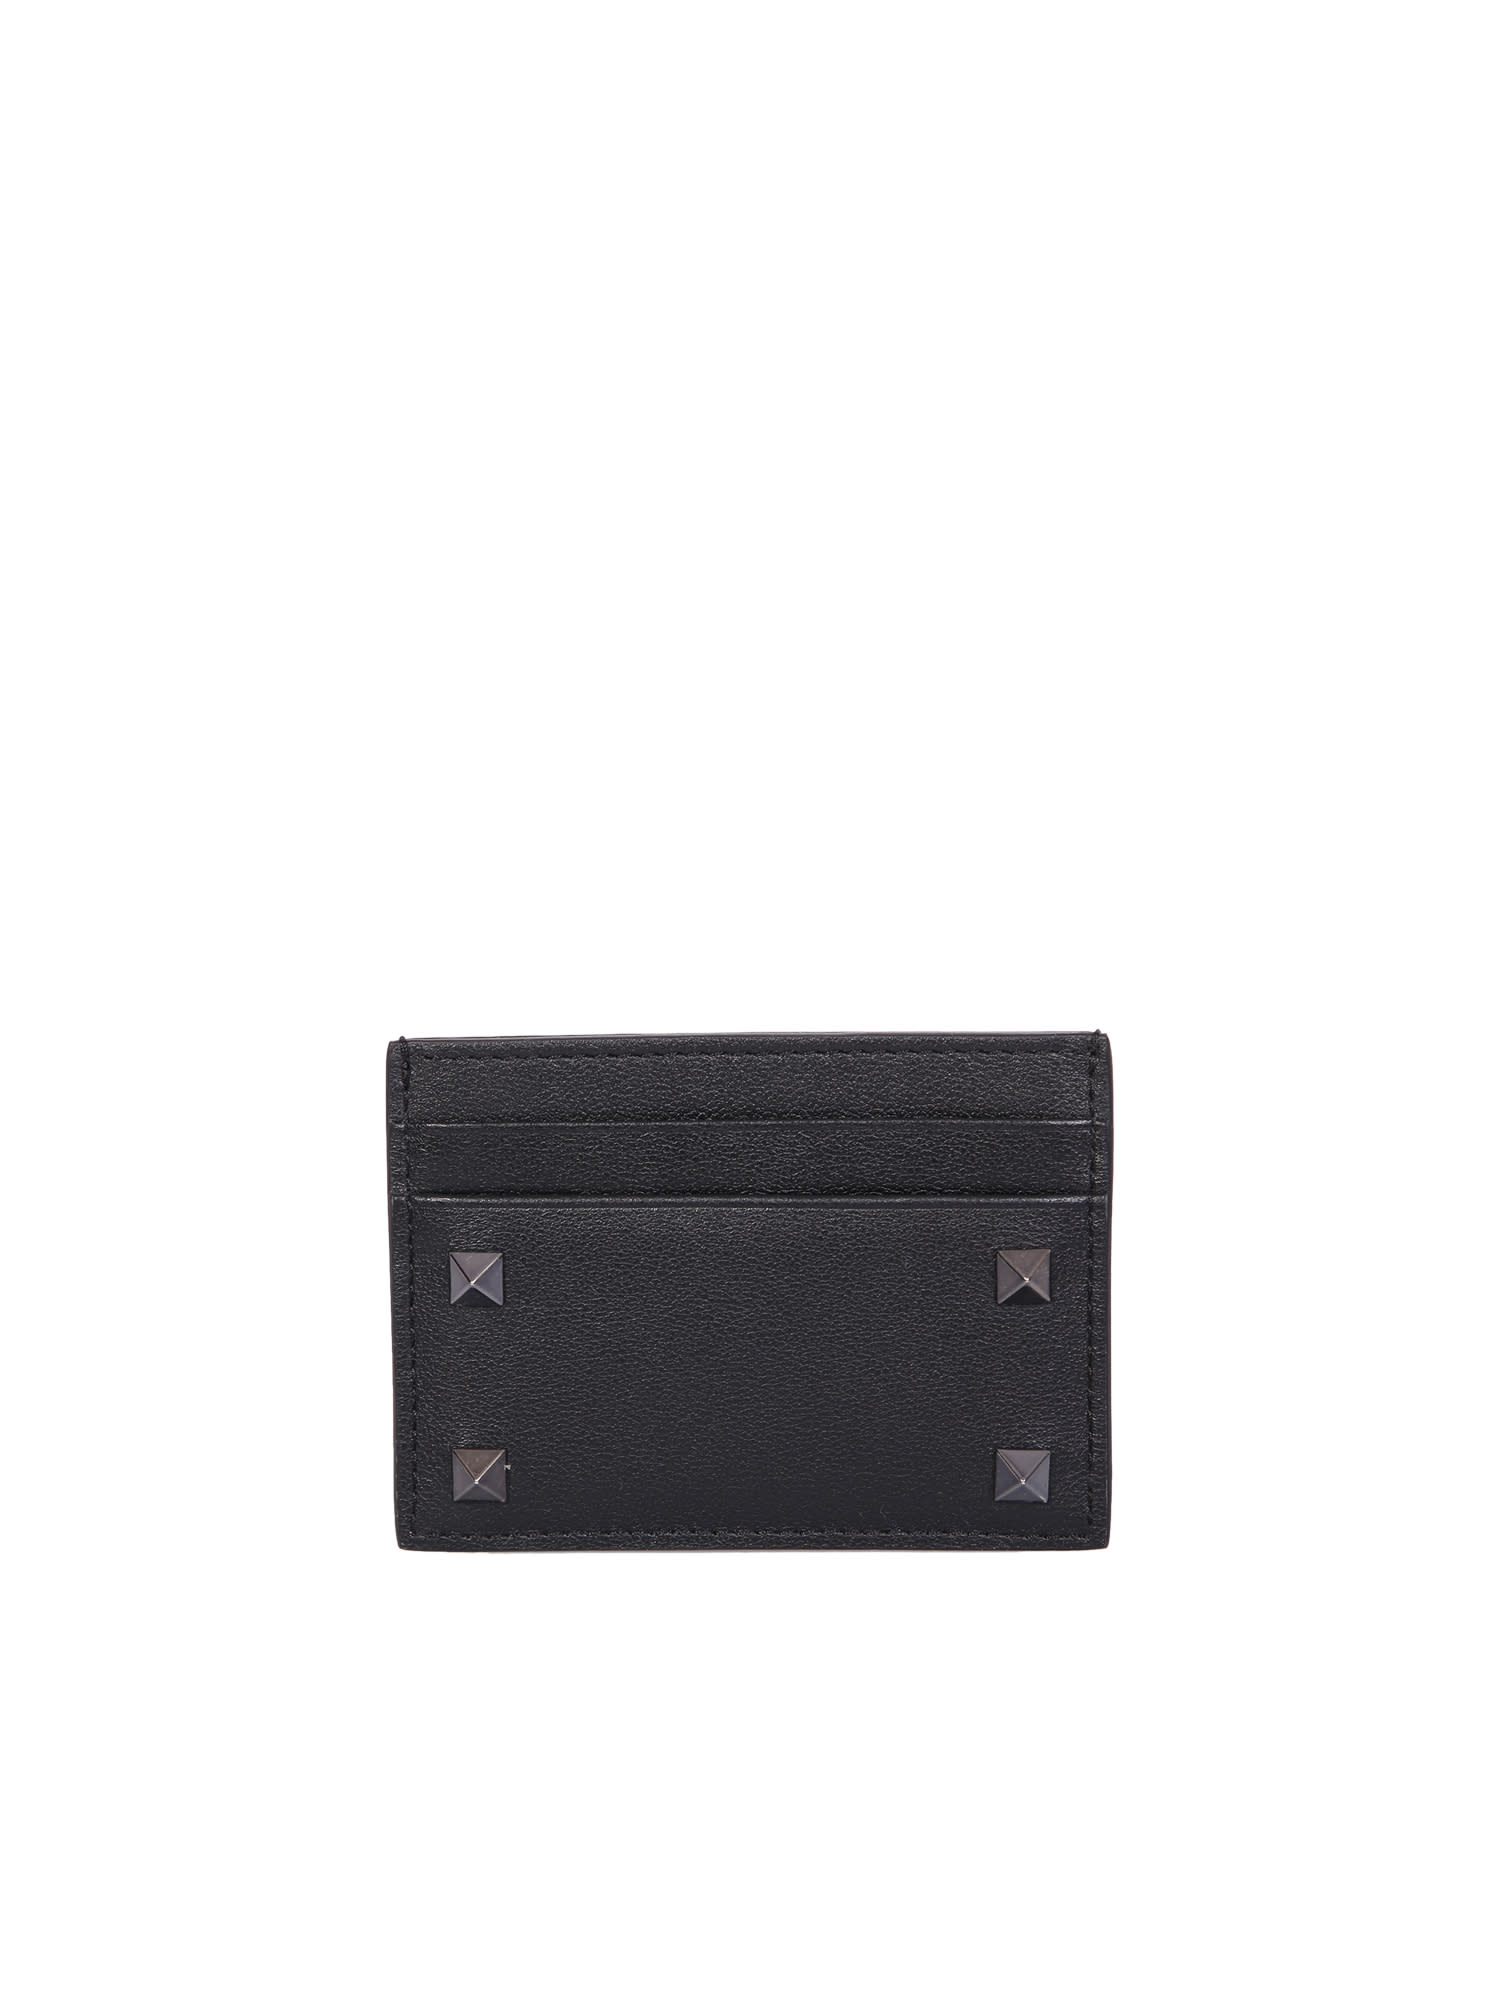 Valentino Garavani Rockstud Leather Card Holder Black